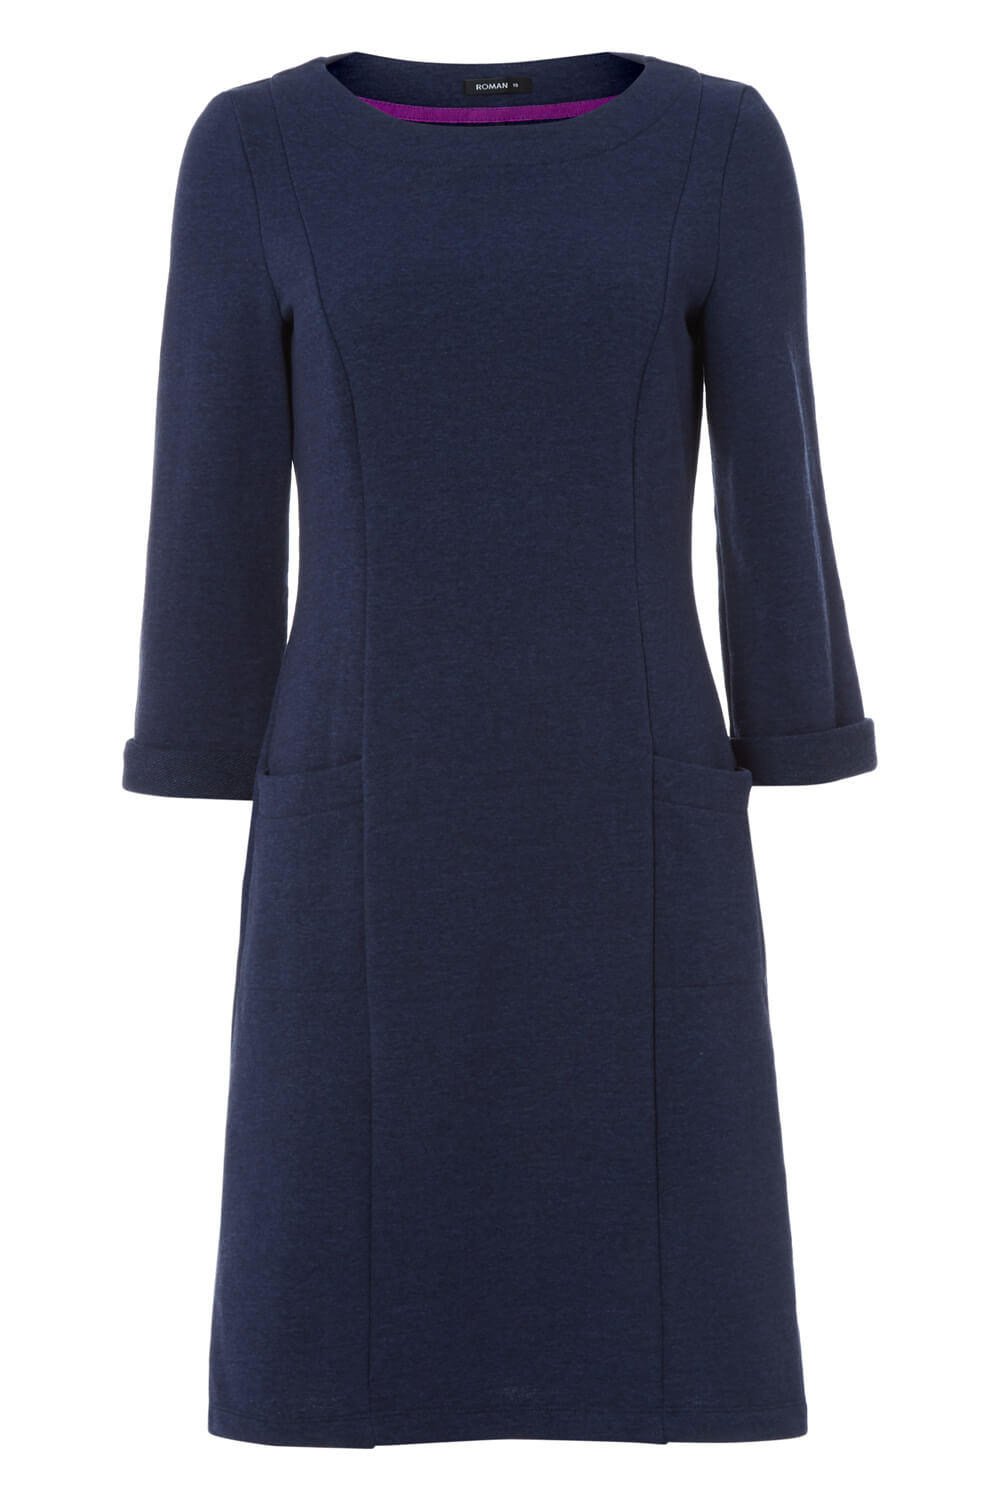 Pocket Detail Shift Dress in Blue - Roman Originals UK